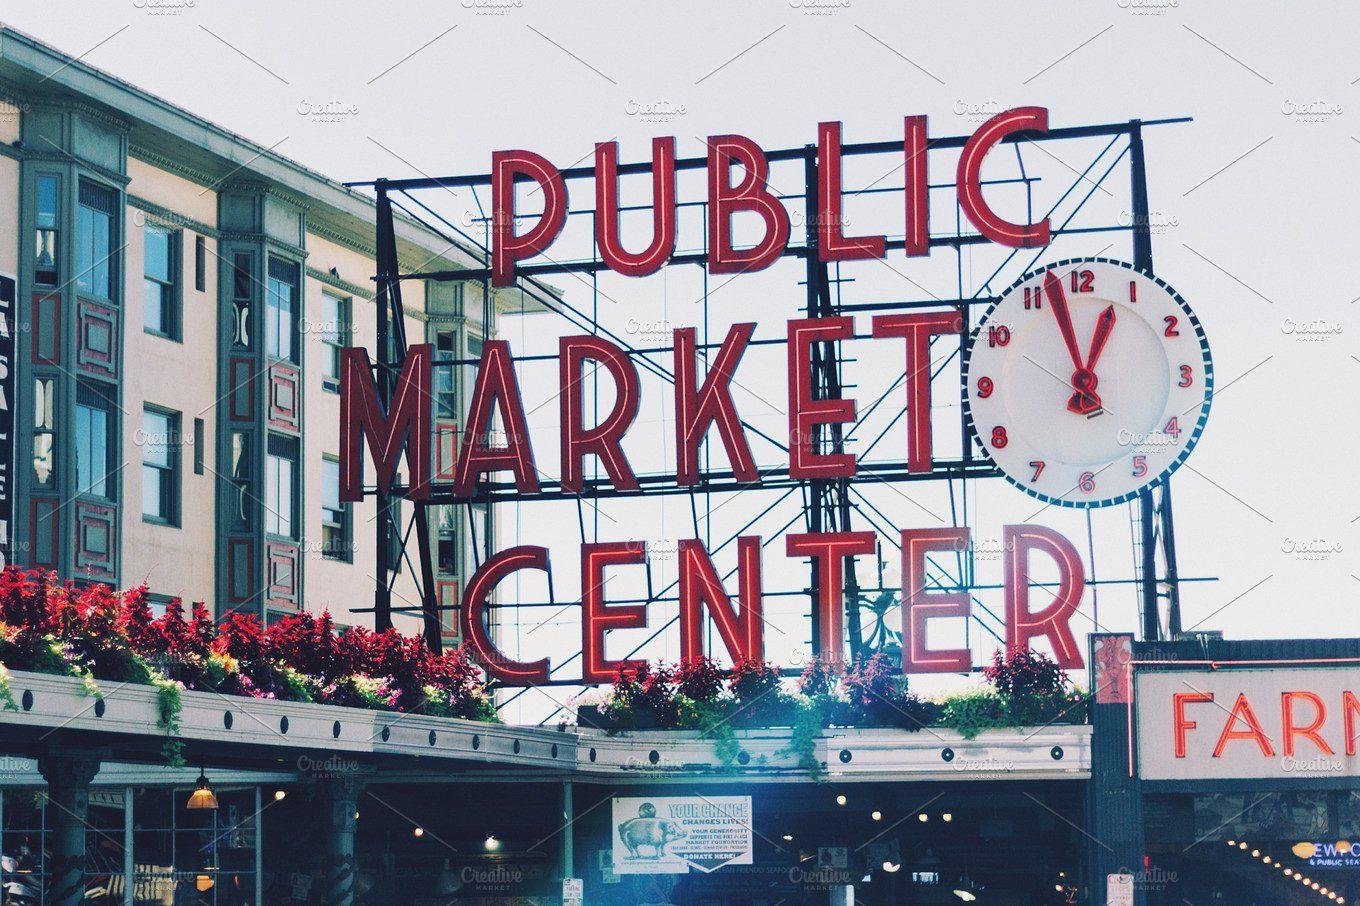 Pike Place Market Logo - Pike Place Market Architecture Photo Creative Market